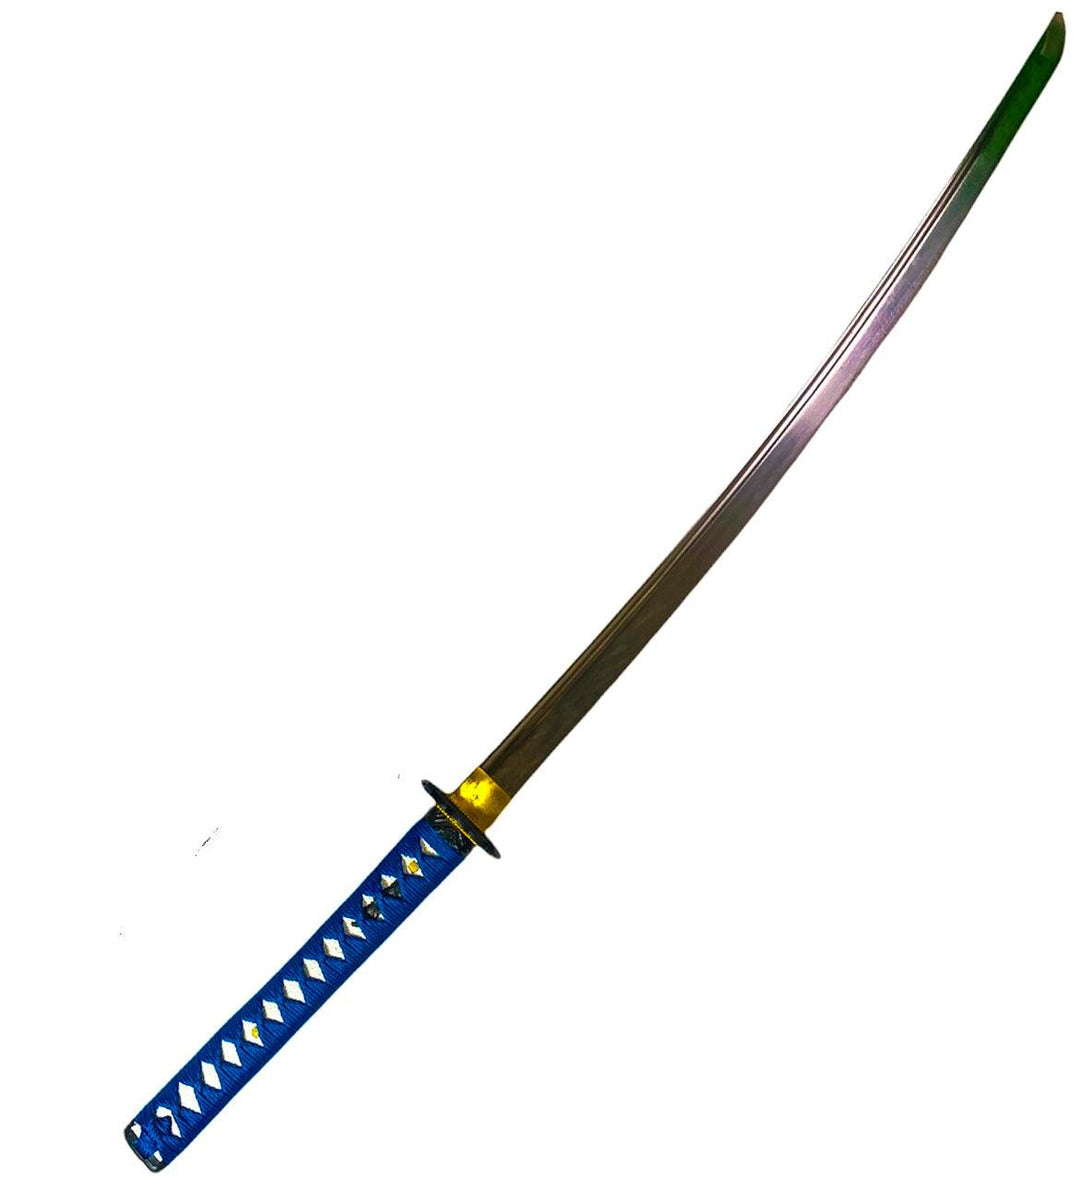 Blue Katana Sword- High Carbon 1095 Steel Sword with Clay Temper Blade - 40.5"